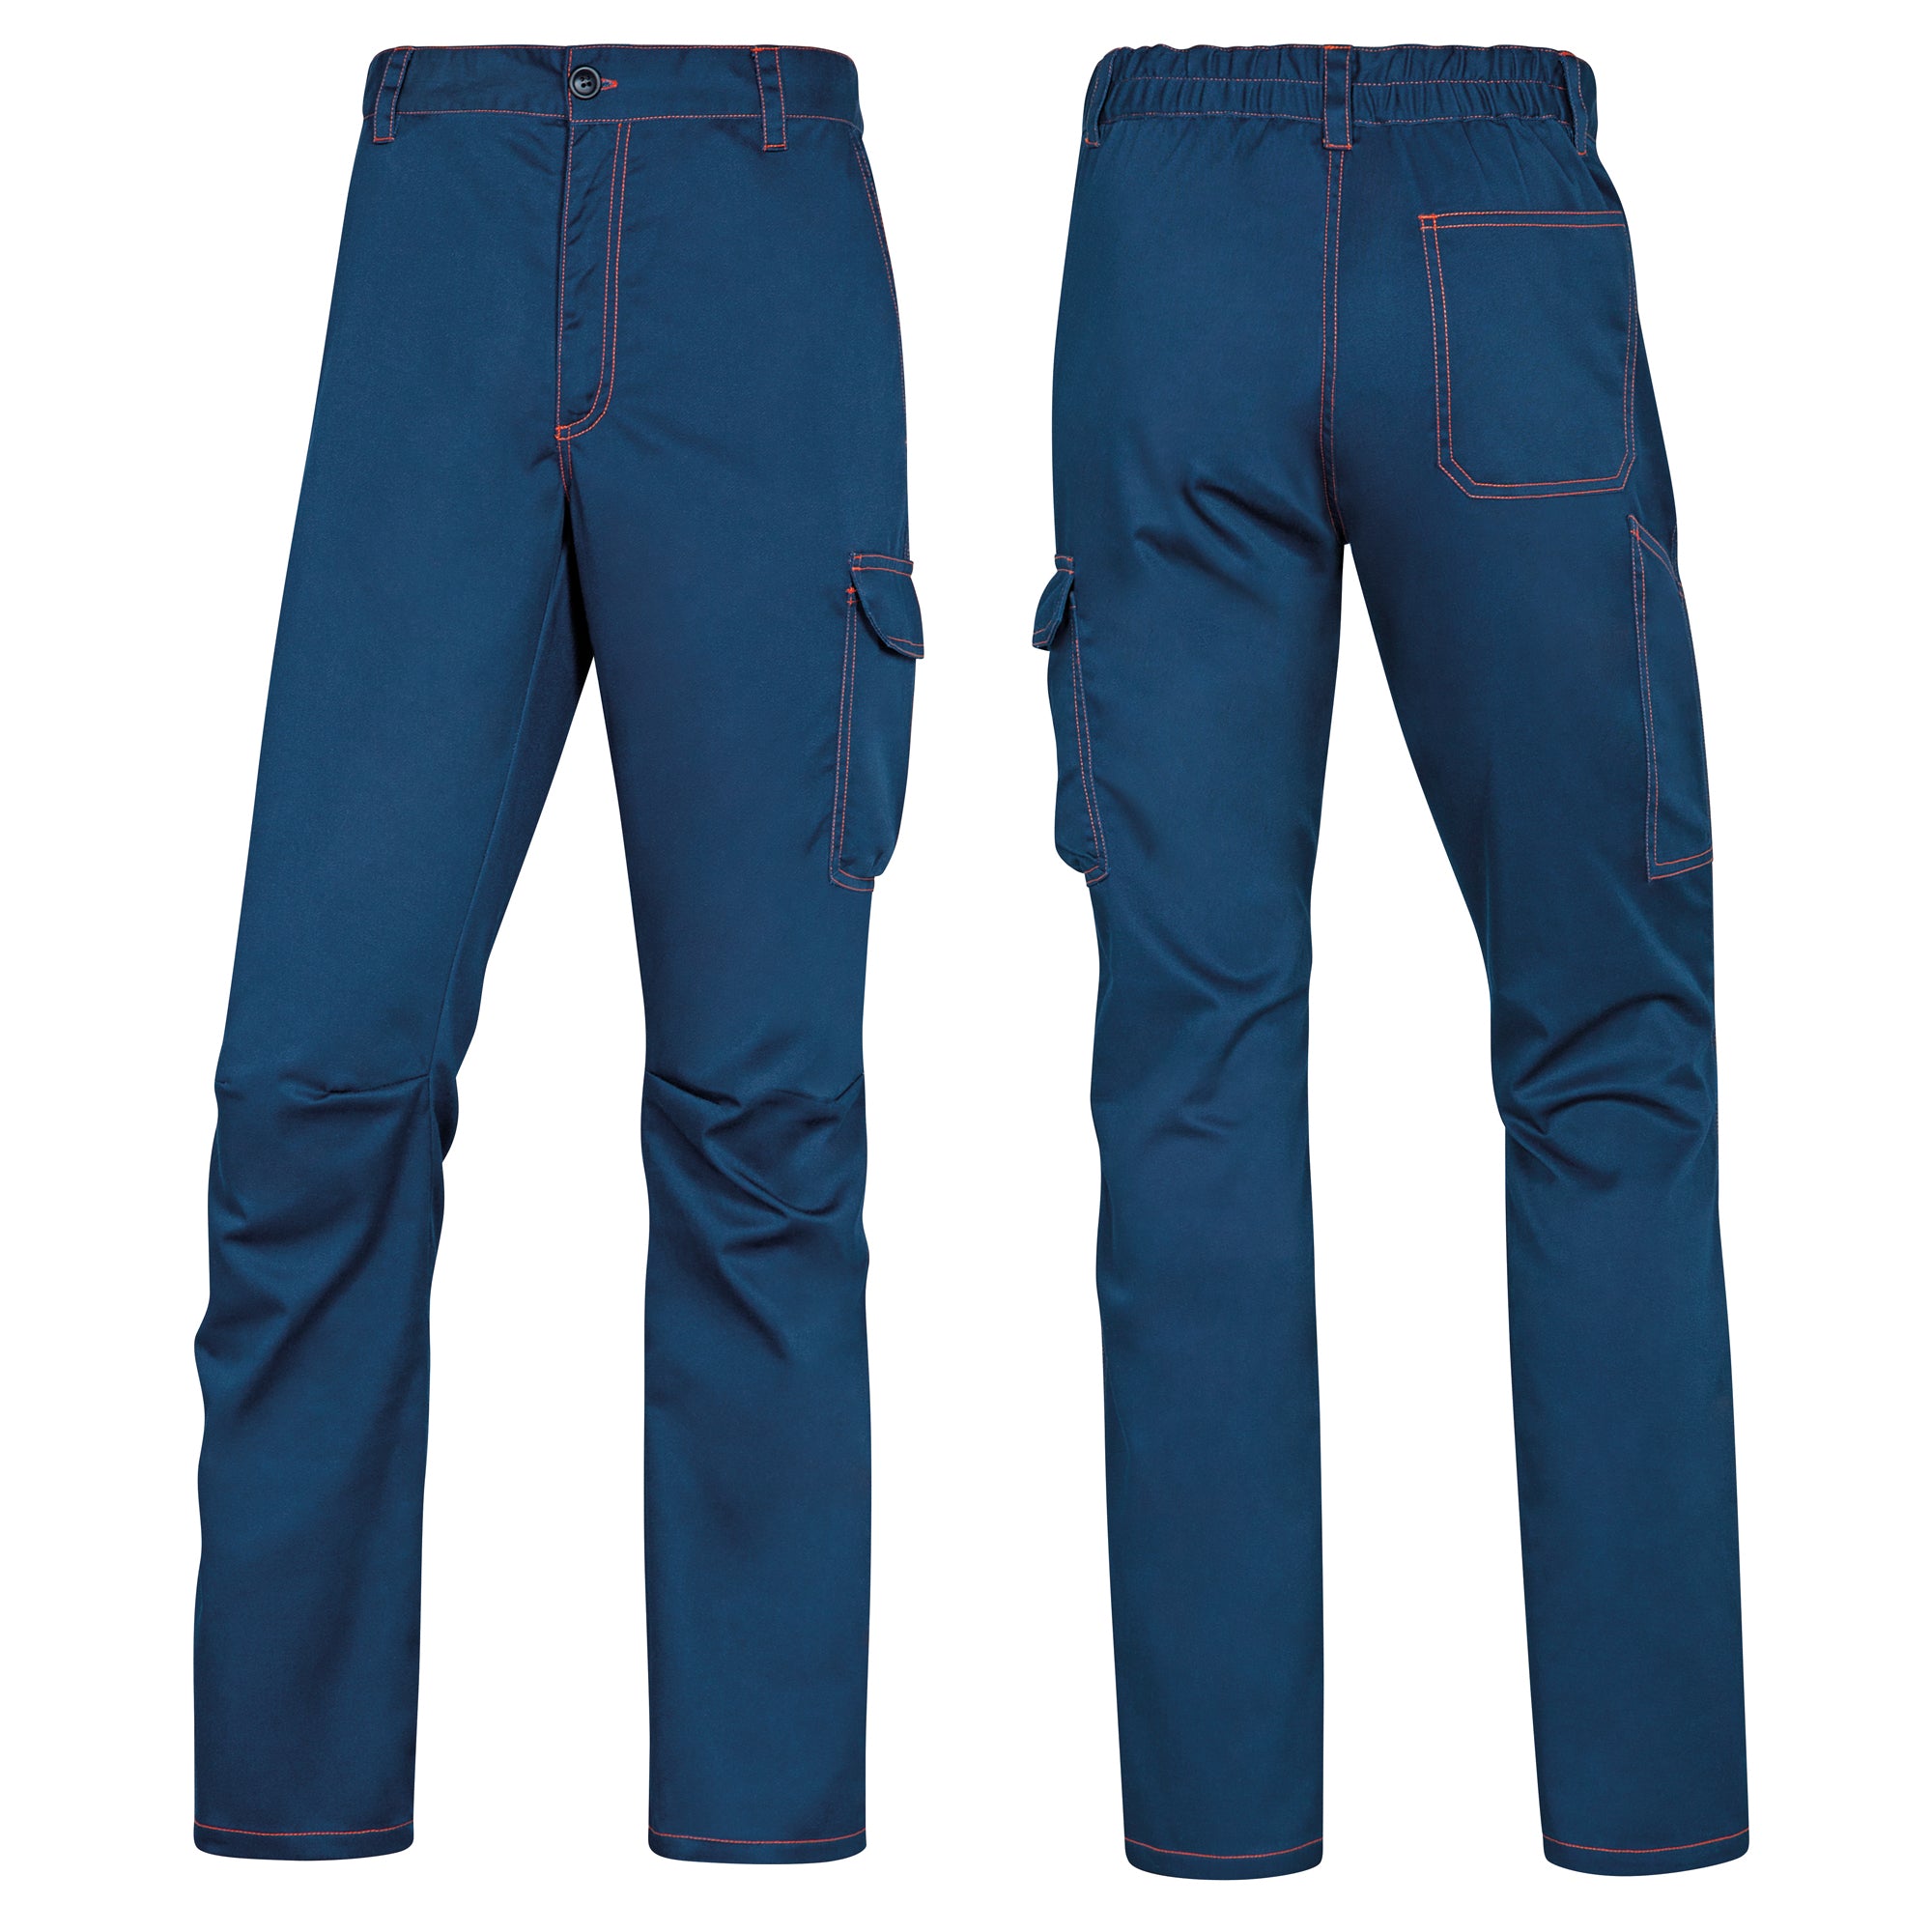 deltaplus-pantalone-lavoro-panostrpa-tg-xxl-blu-arancio